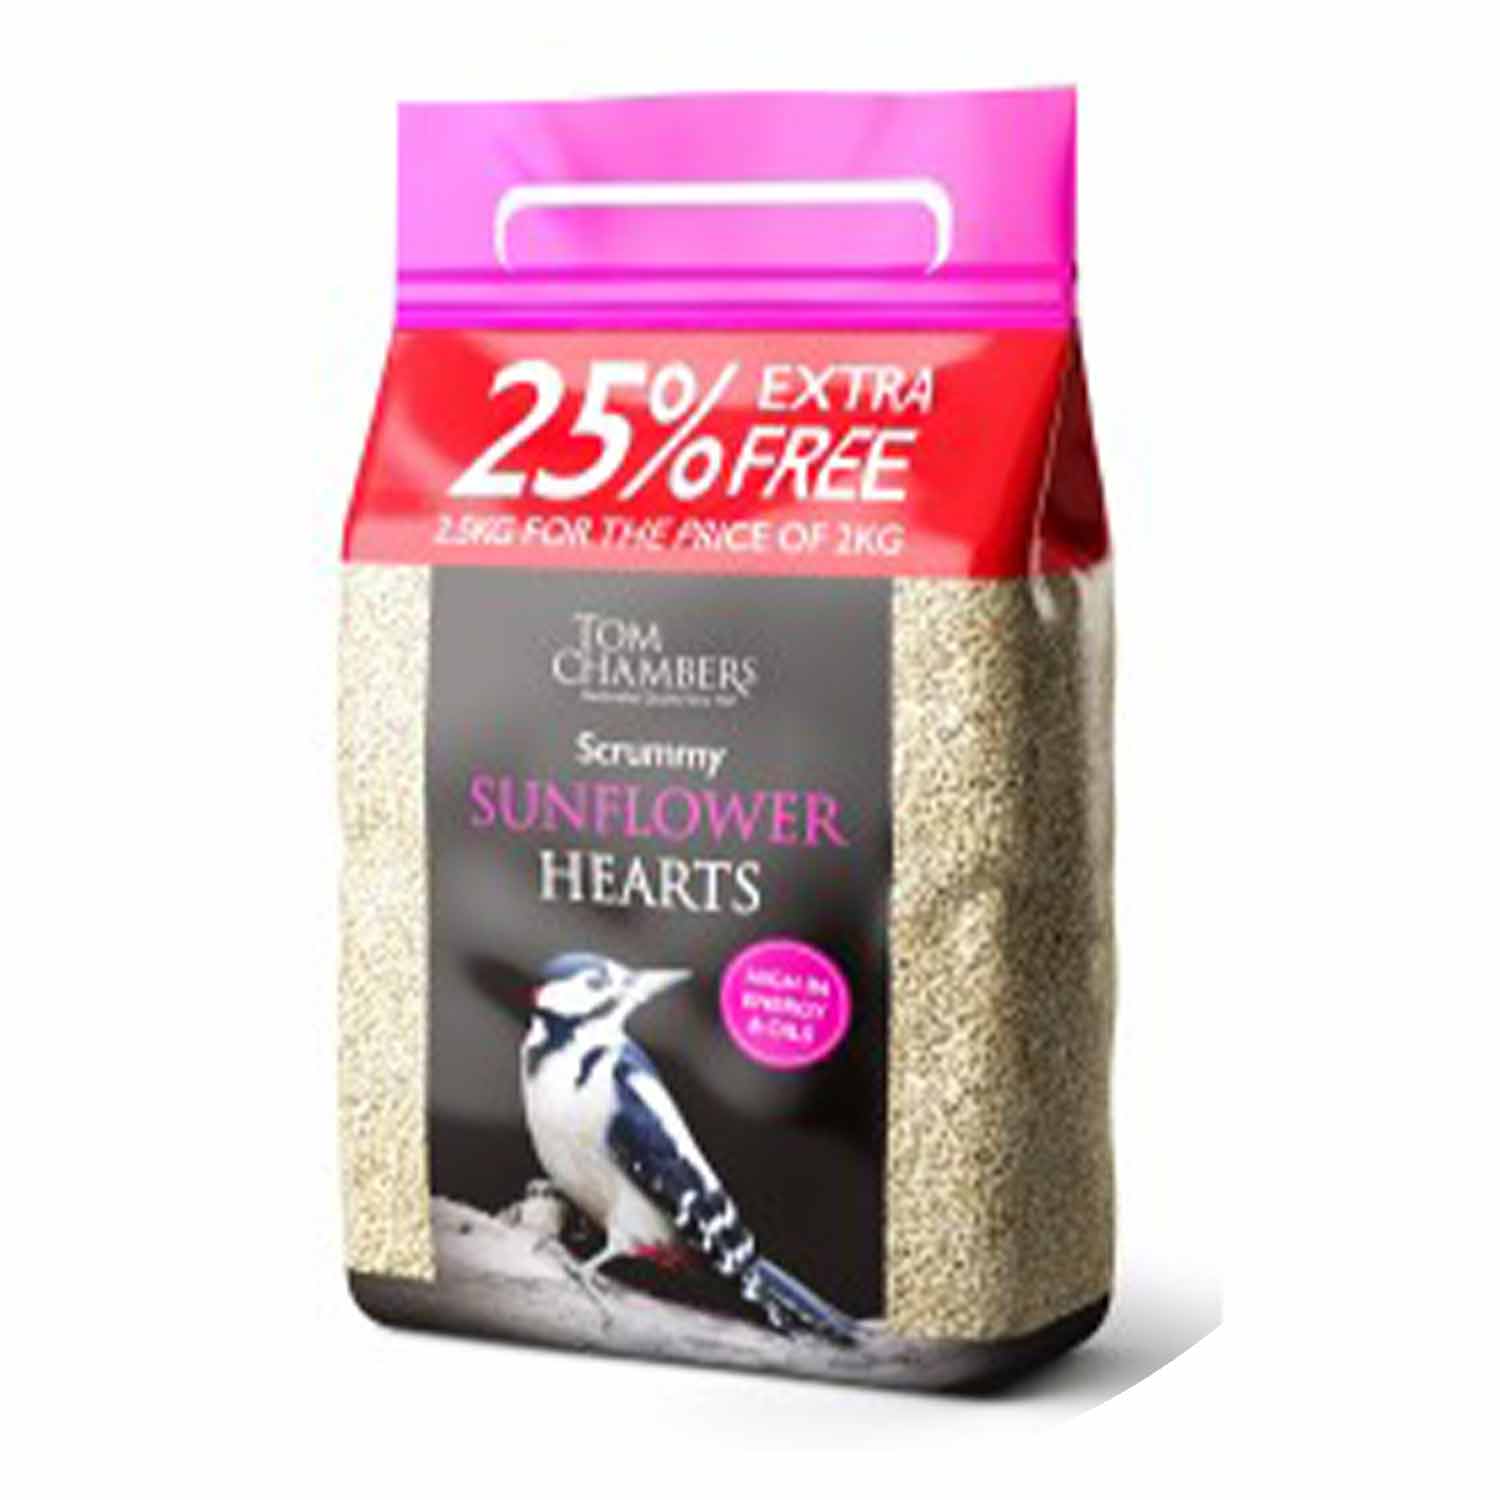 Scrummy Sunflower Hearts 2 Kg + 25% Extra Free